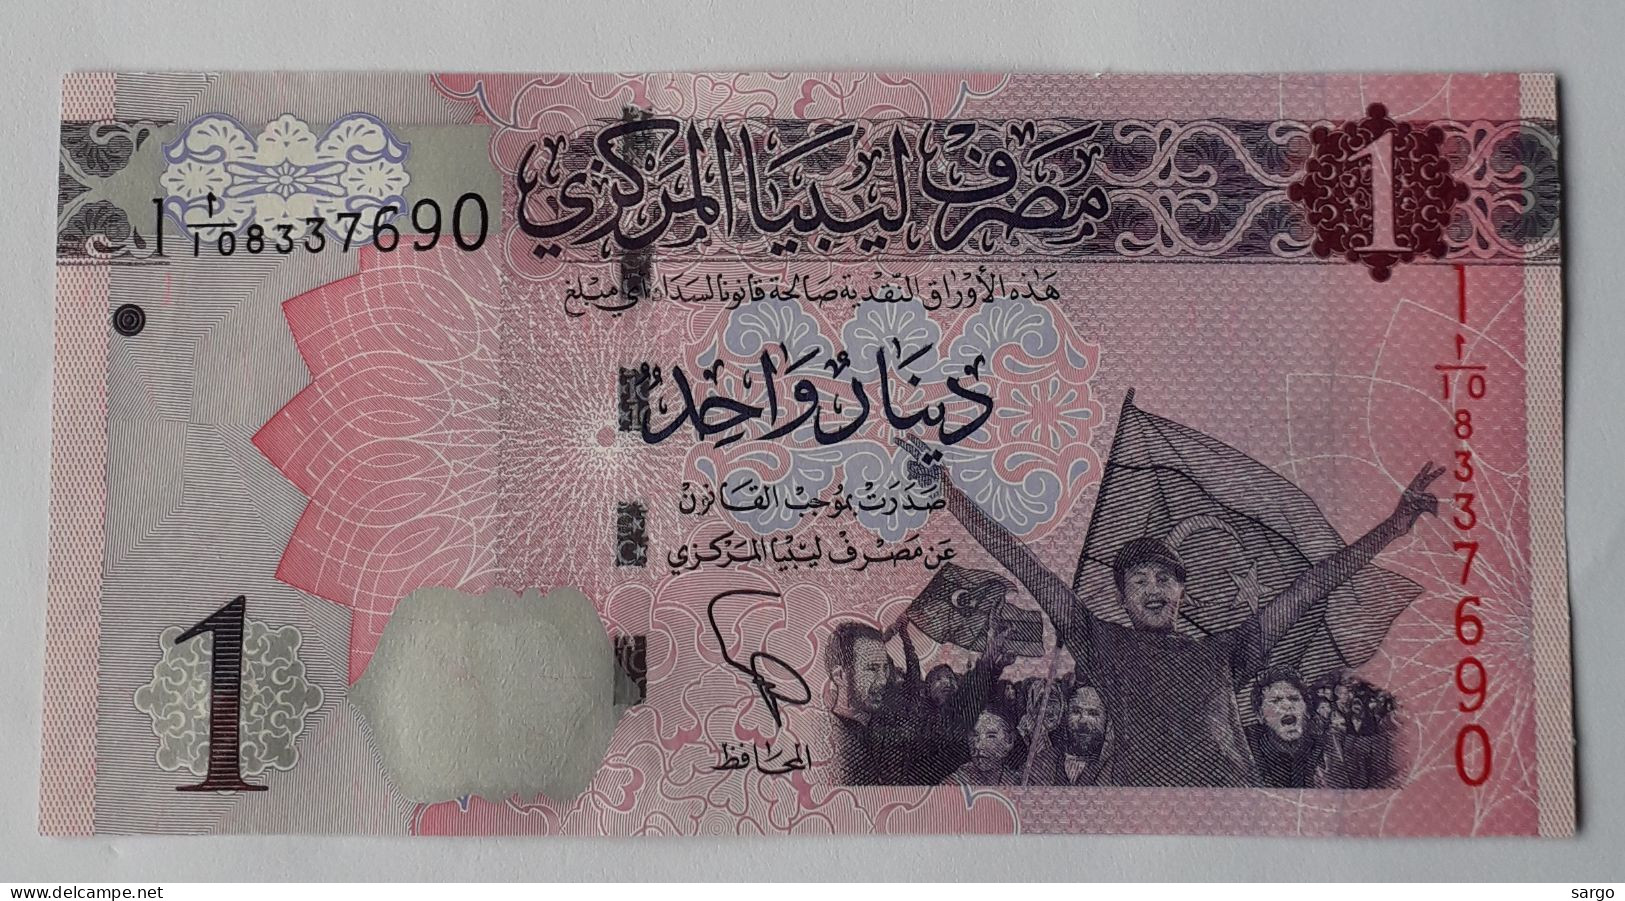 LIBYA - 1 DINAR - 2013 -  P 76  - UNC - BANKNOTES - PAPER MONEY - CARTAMONETA - - Libyen